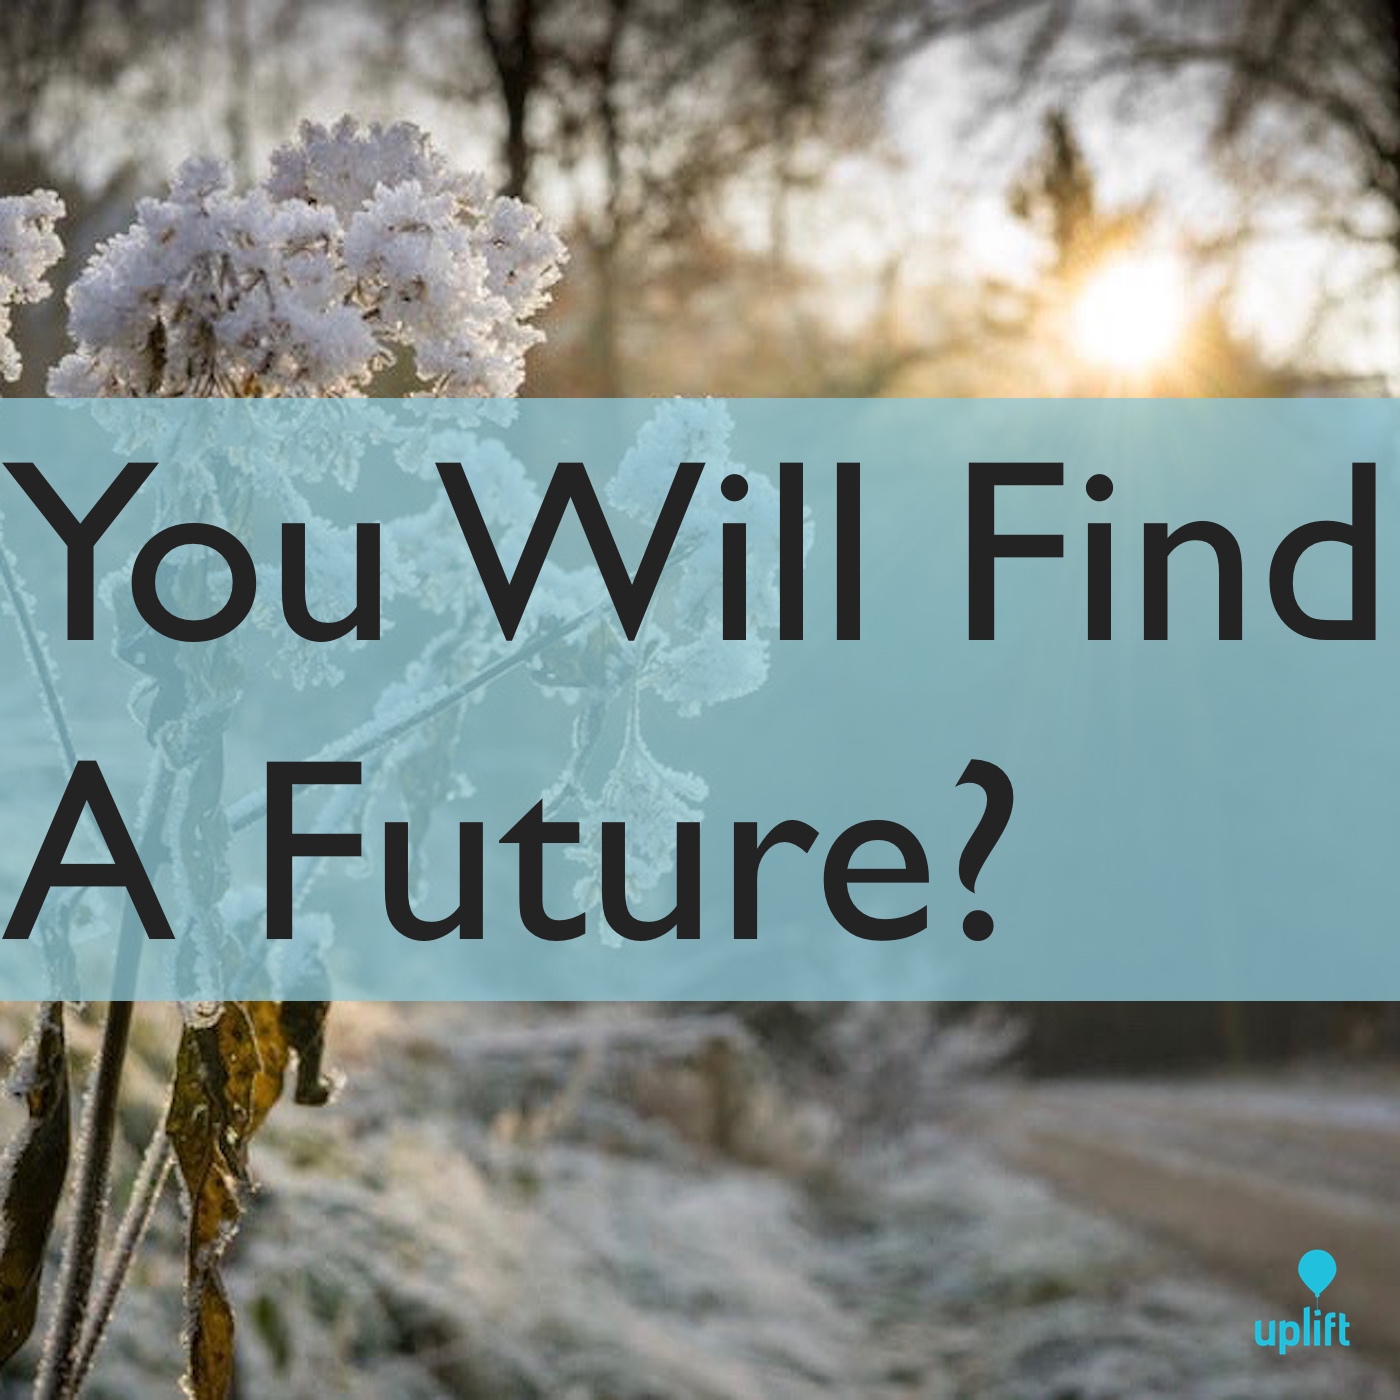 Episode 50: You Will Find A Future?